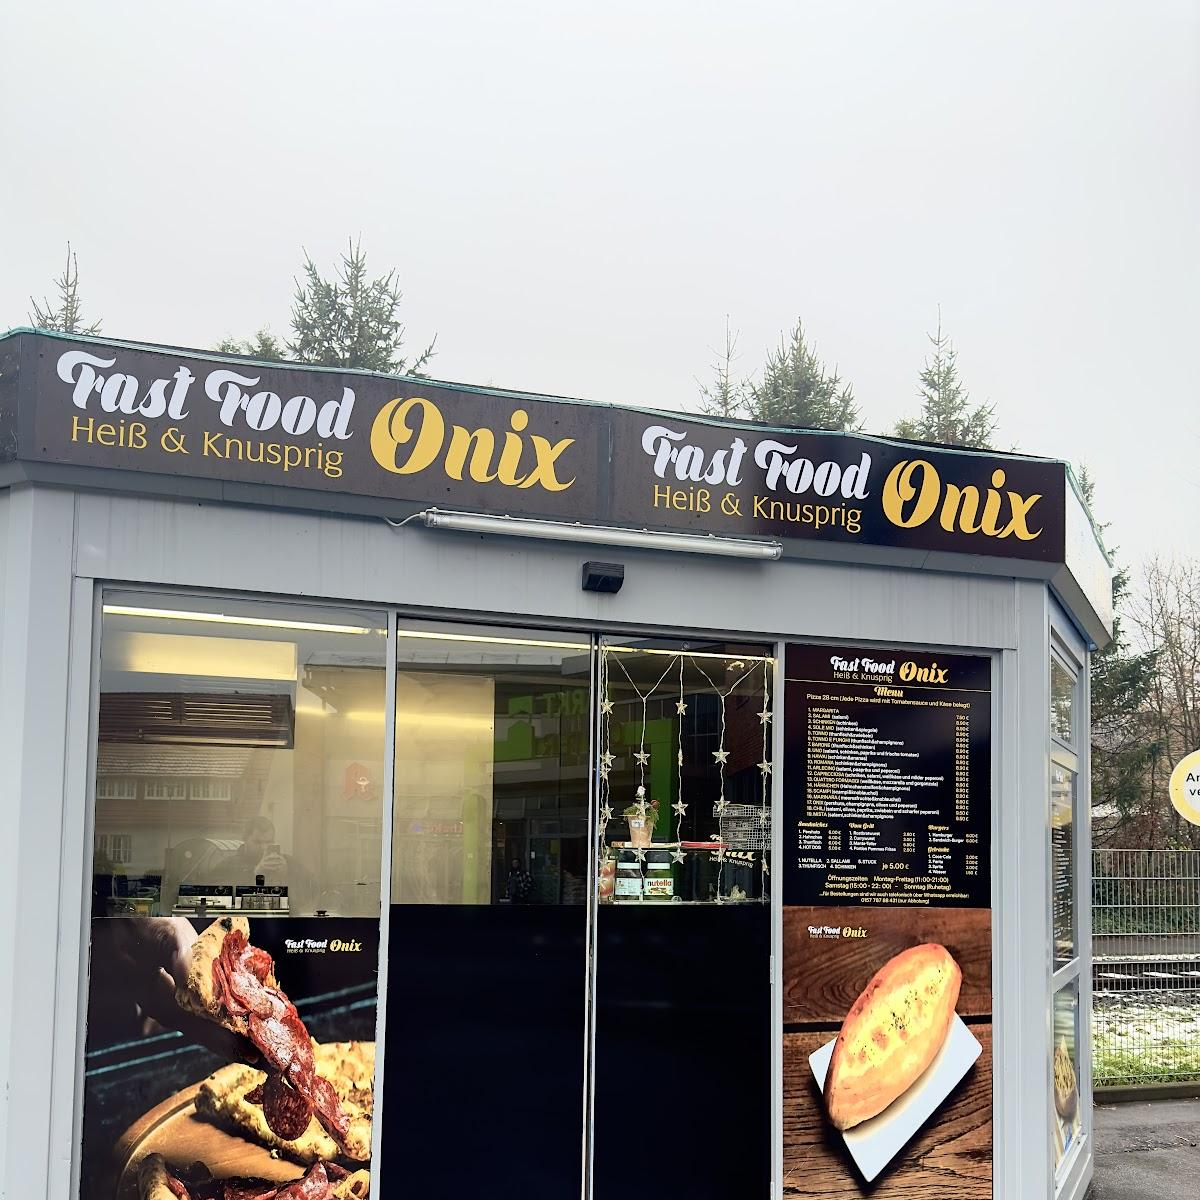 Restaurant "Fast Food Onix" in Verl